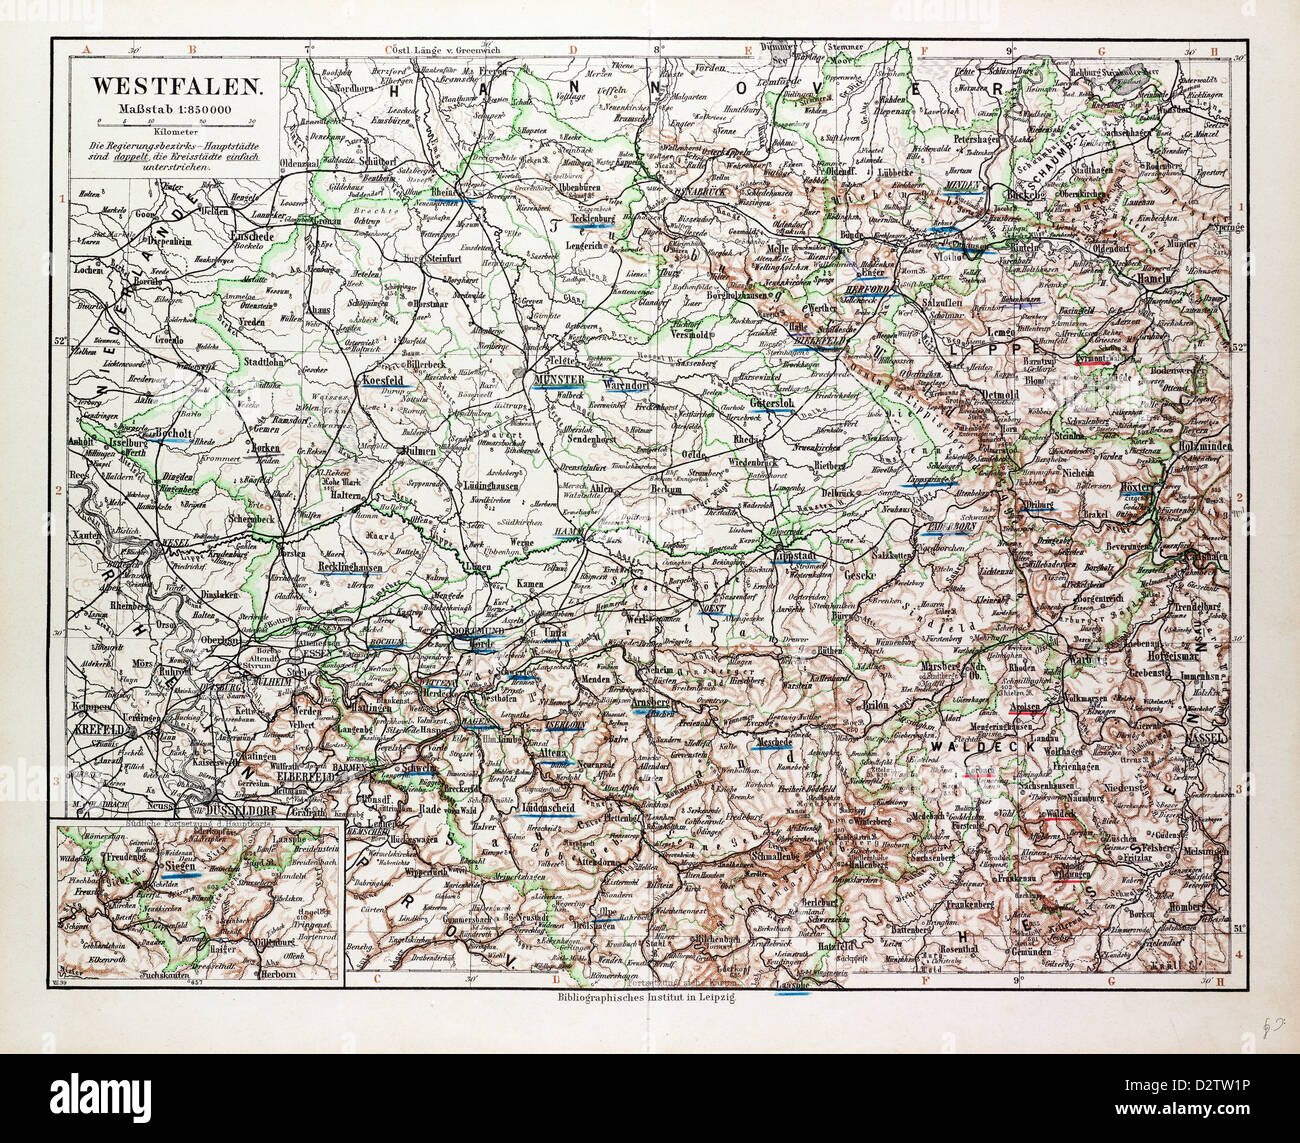 MAP OF NORDRHEIN-WESTFALEN GERMANY 1899 Stock Photo